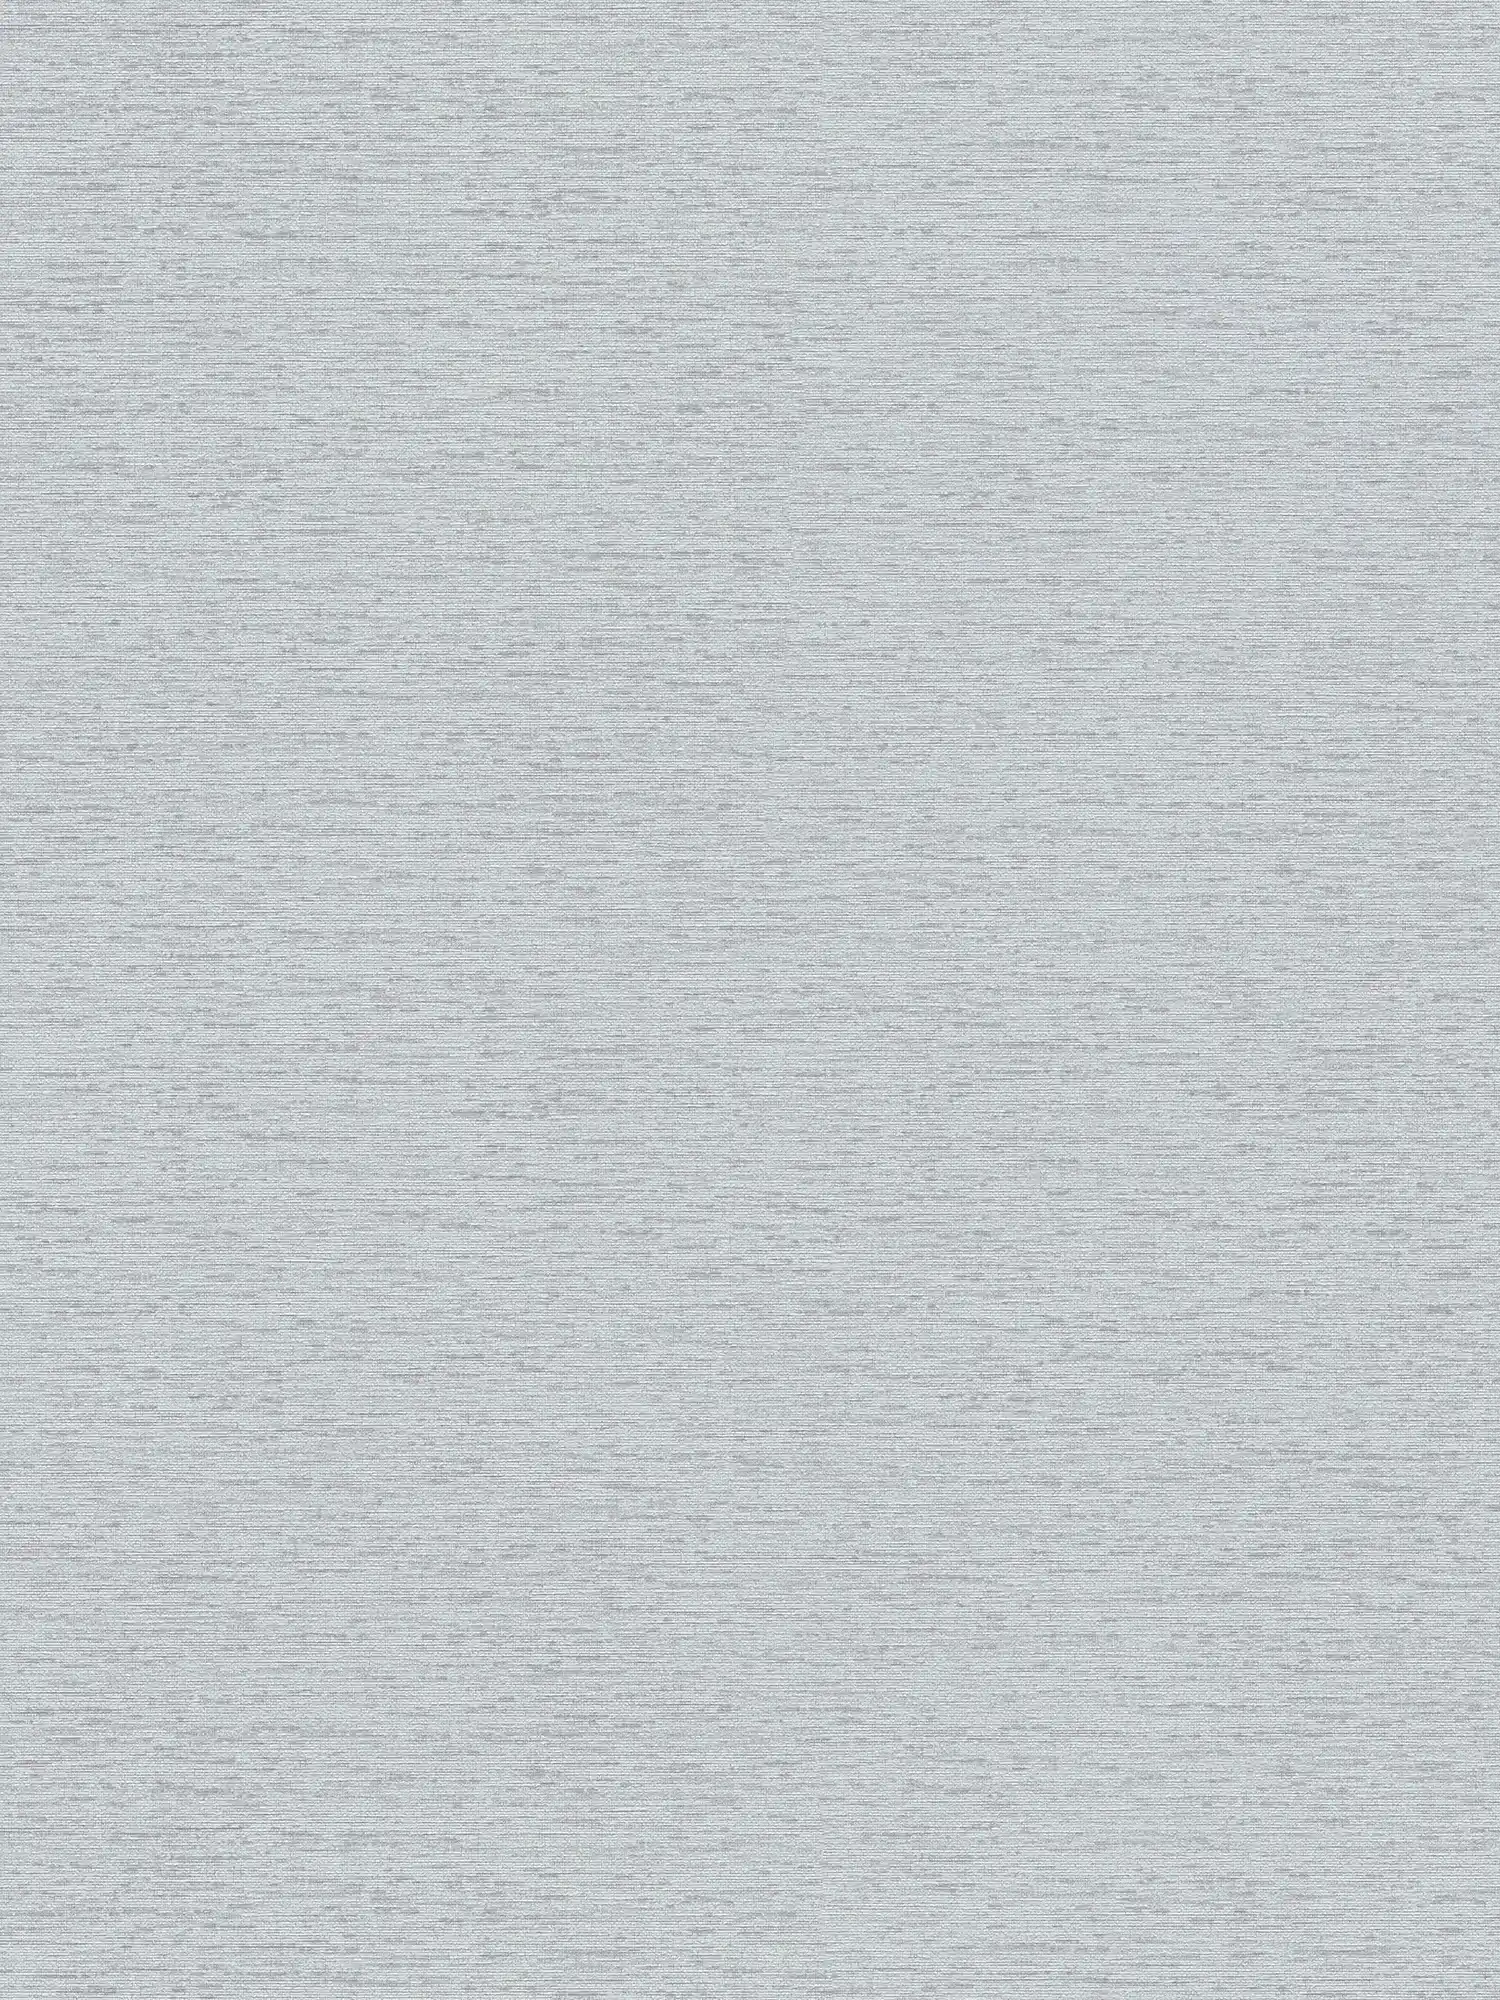 Papel pintado liso no tejido de aspecto textil con estructura ligera, mate - gris, gris claro
